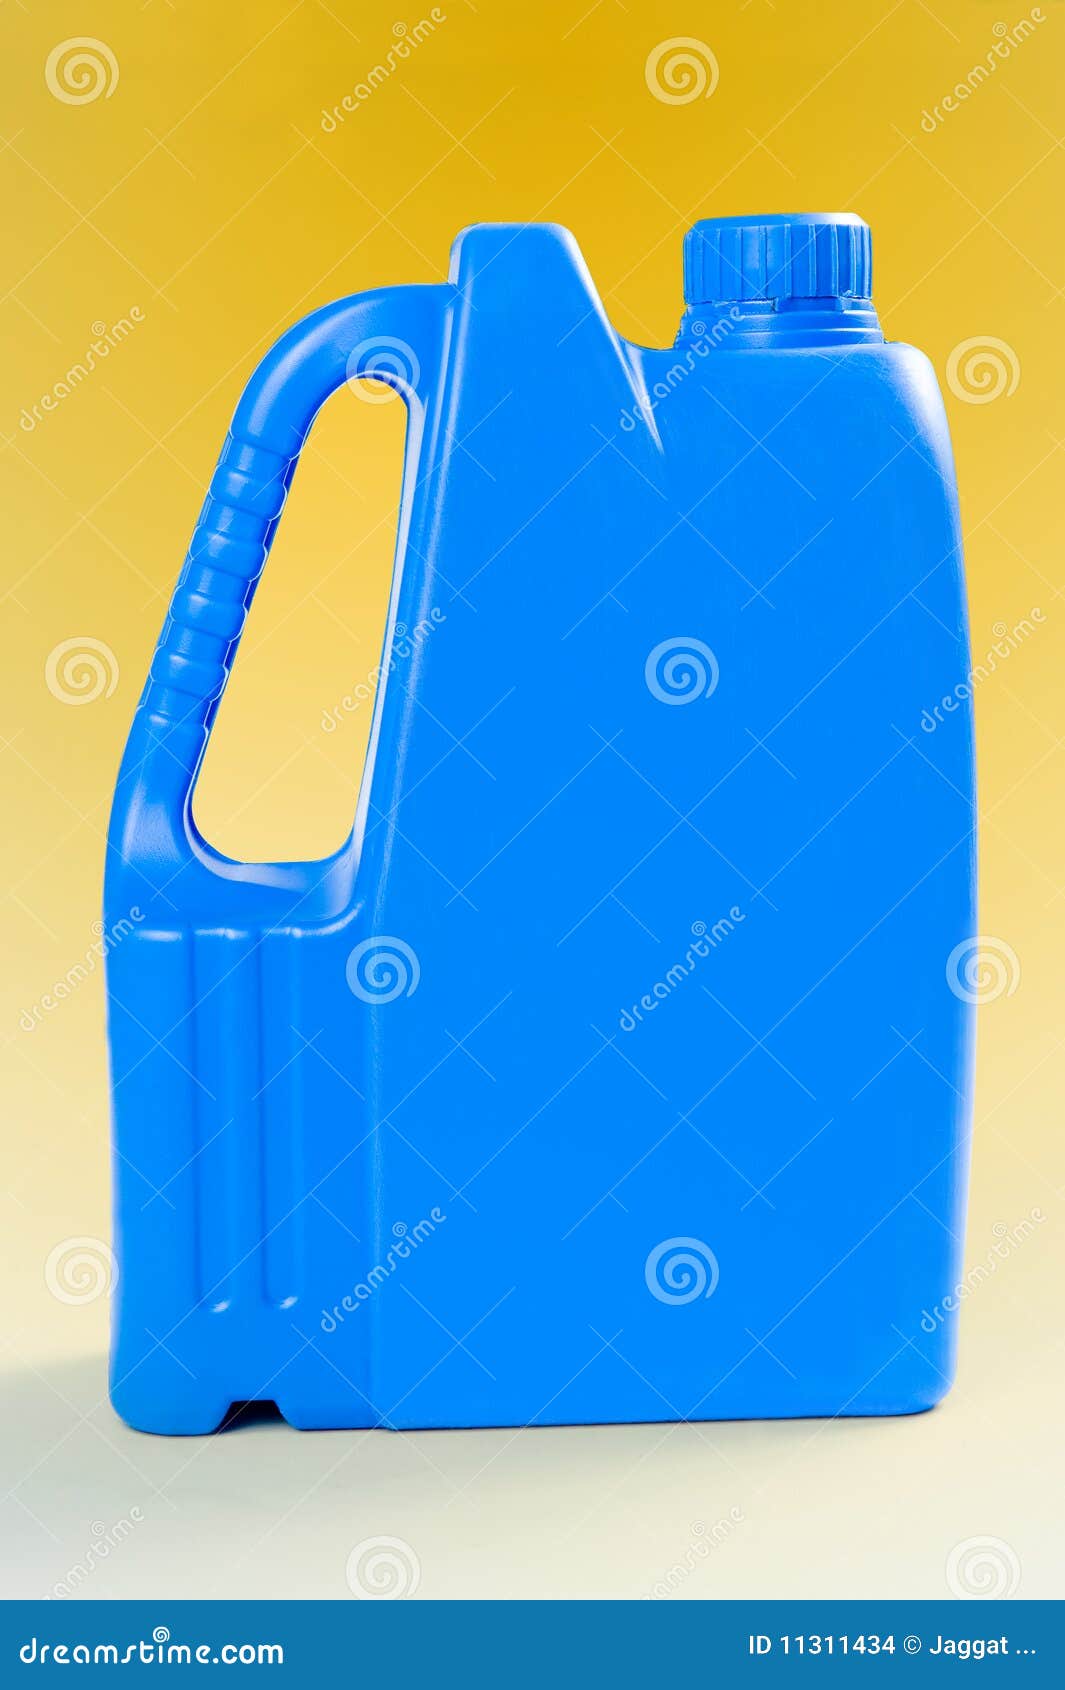 Blue plastic barrel stock photo. Image of danger, petroleum - 11311434